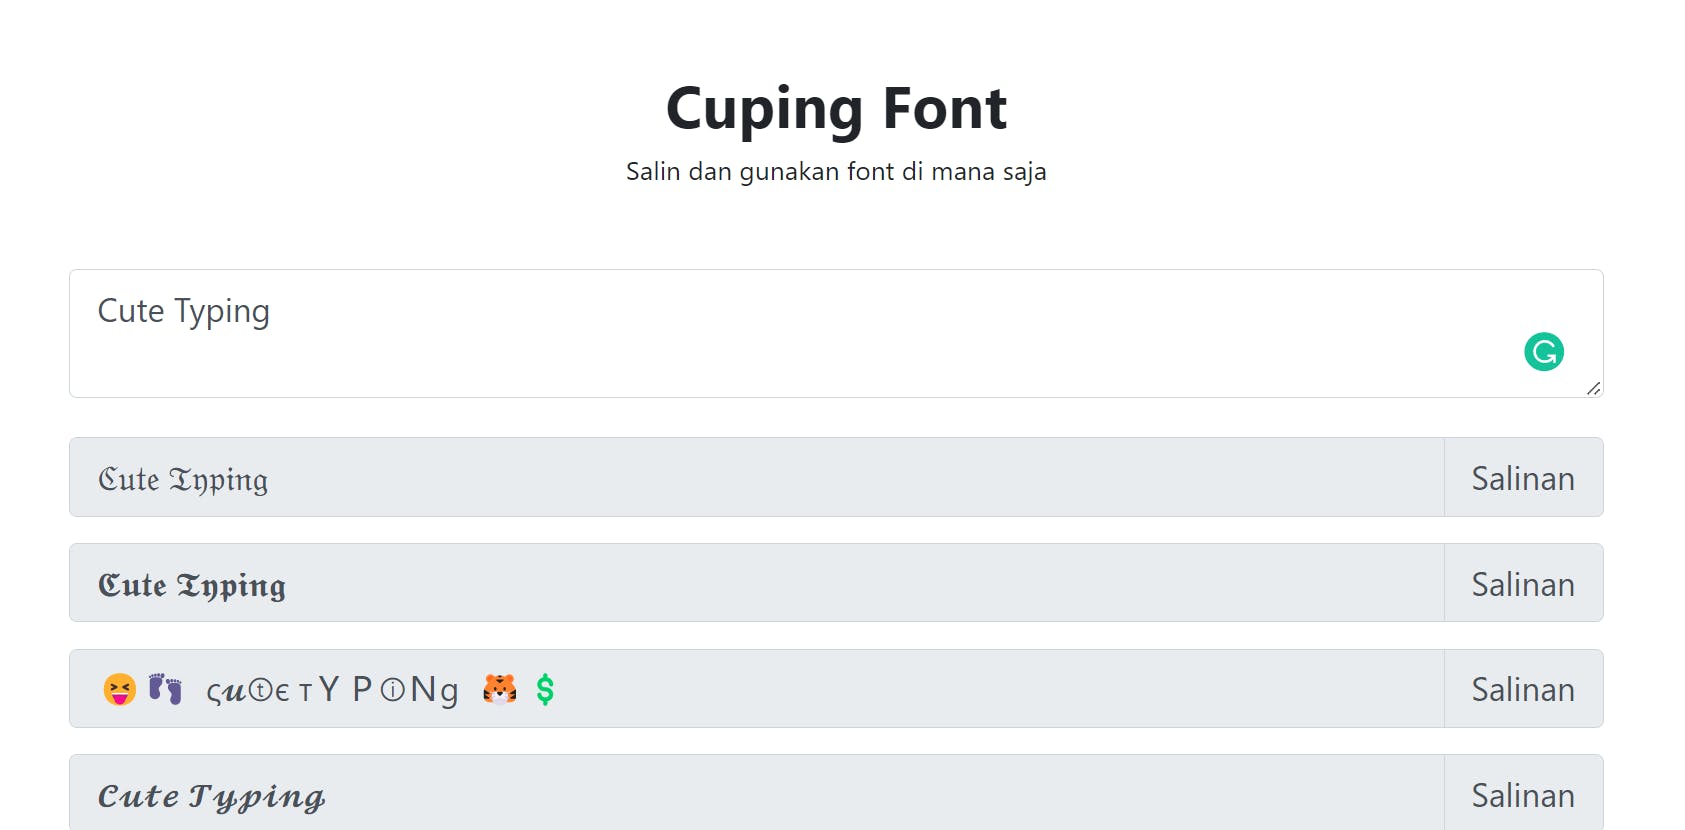 Cuping Font media 1